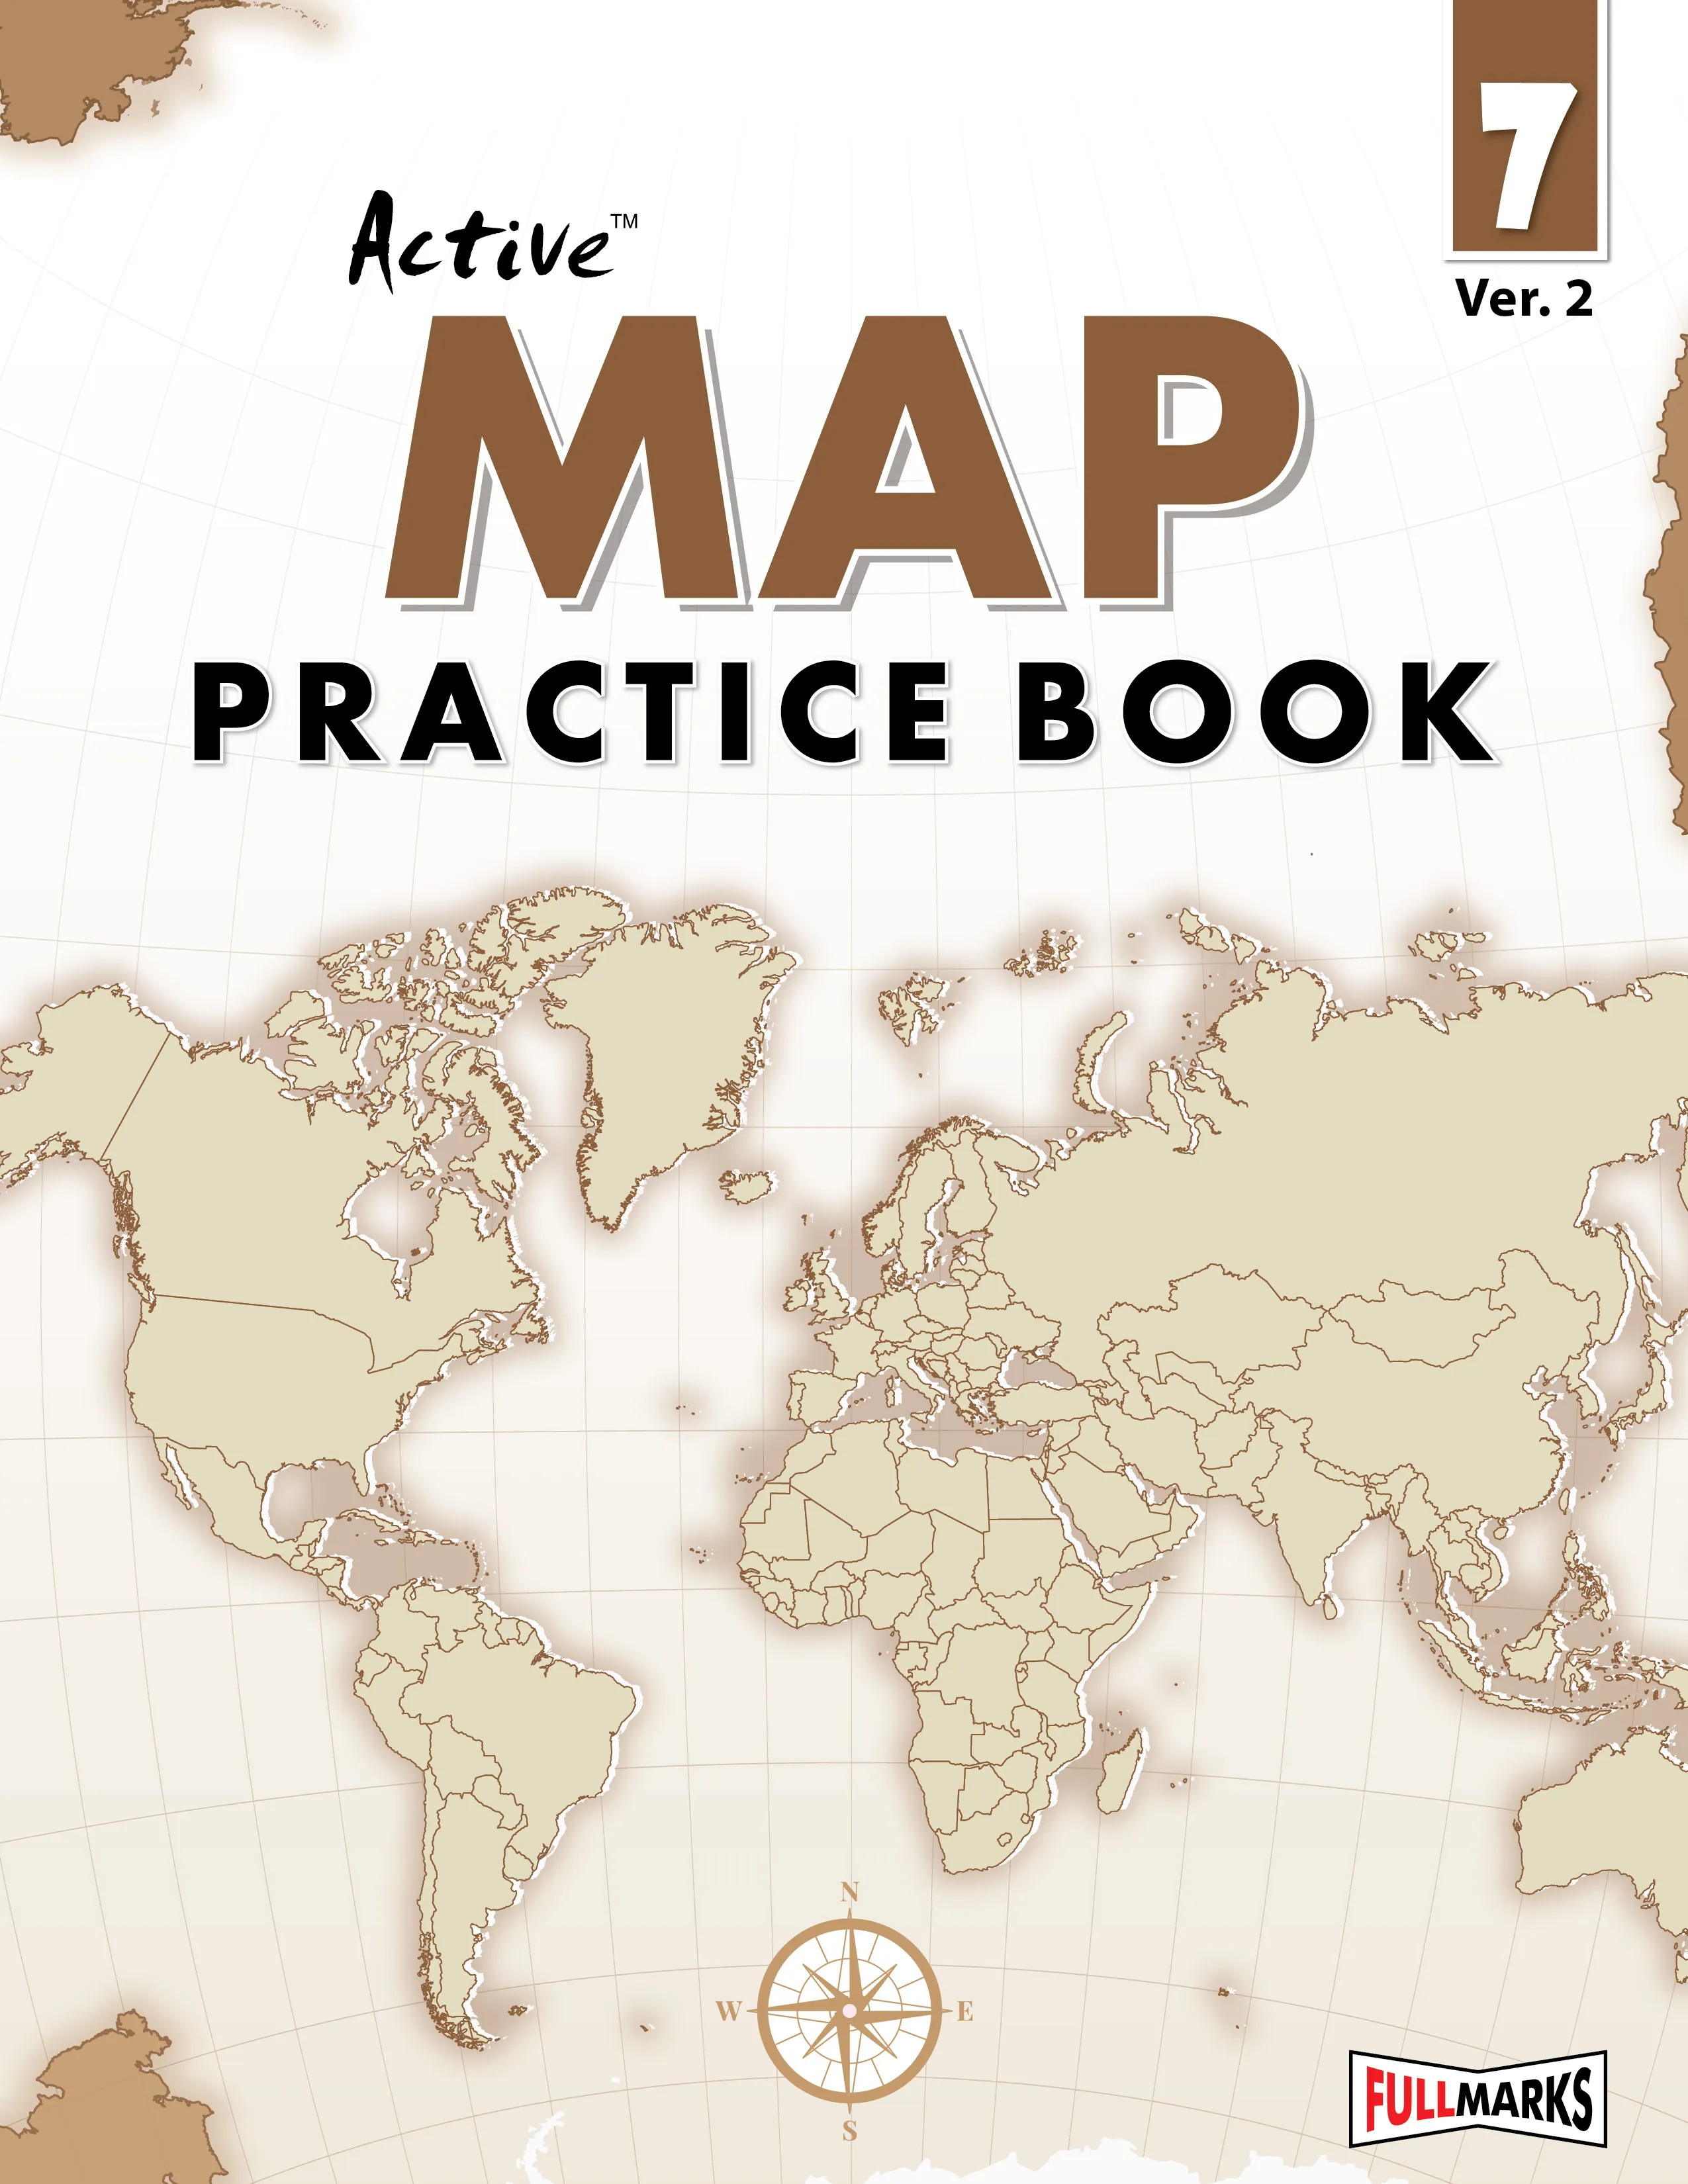 Active MAP Practice Book-7